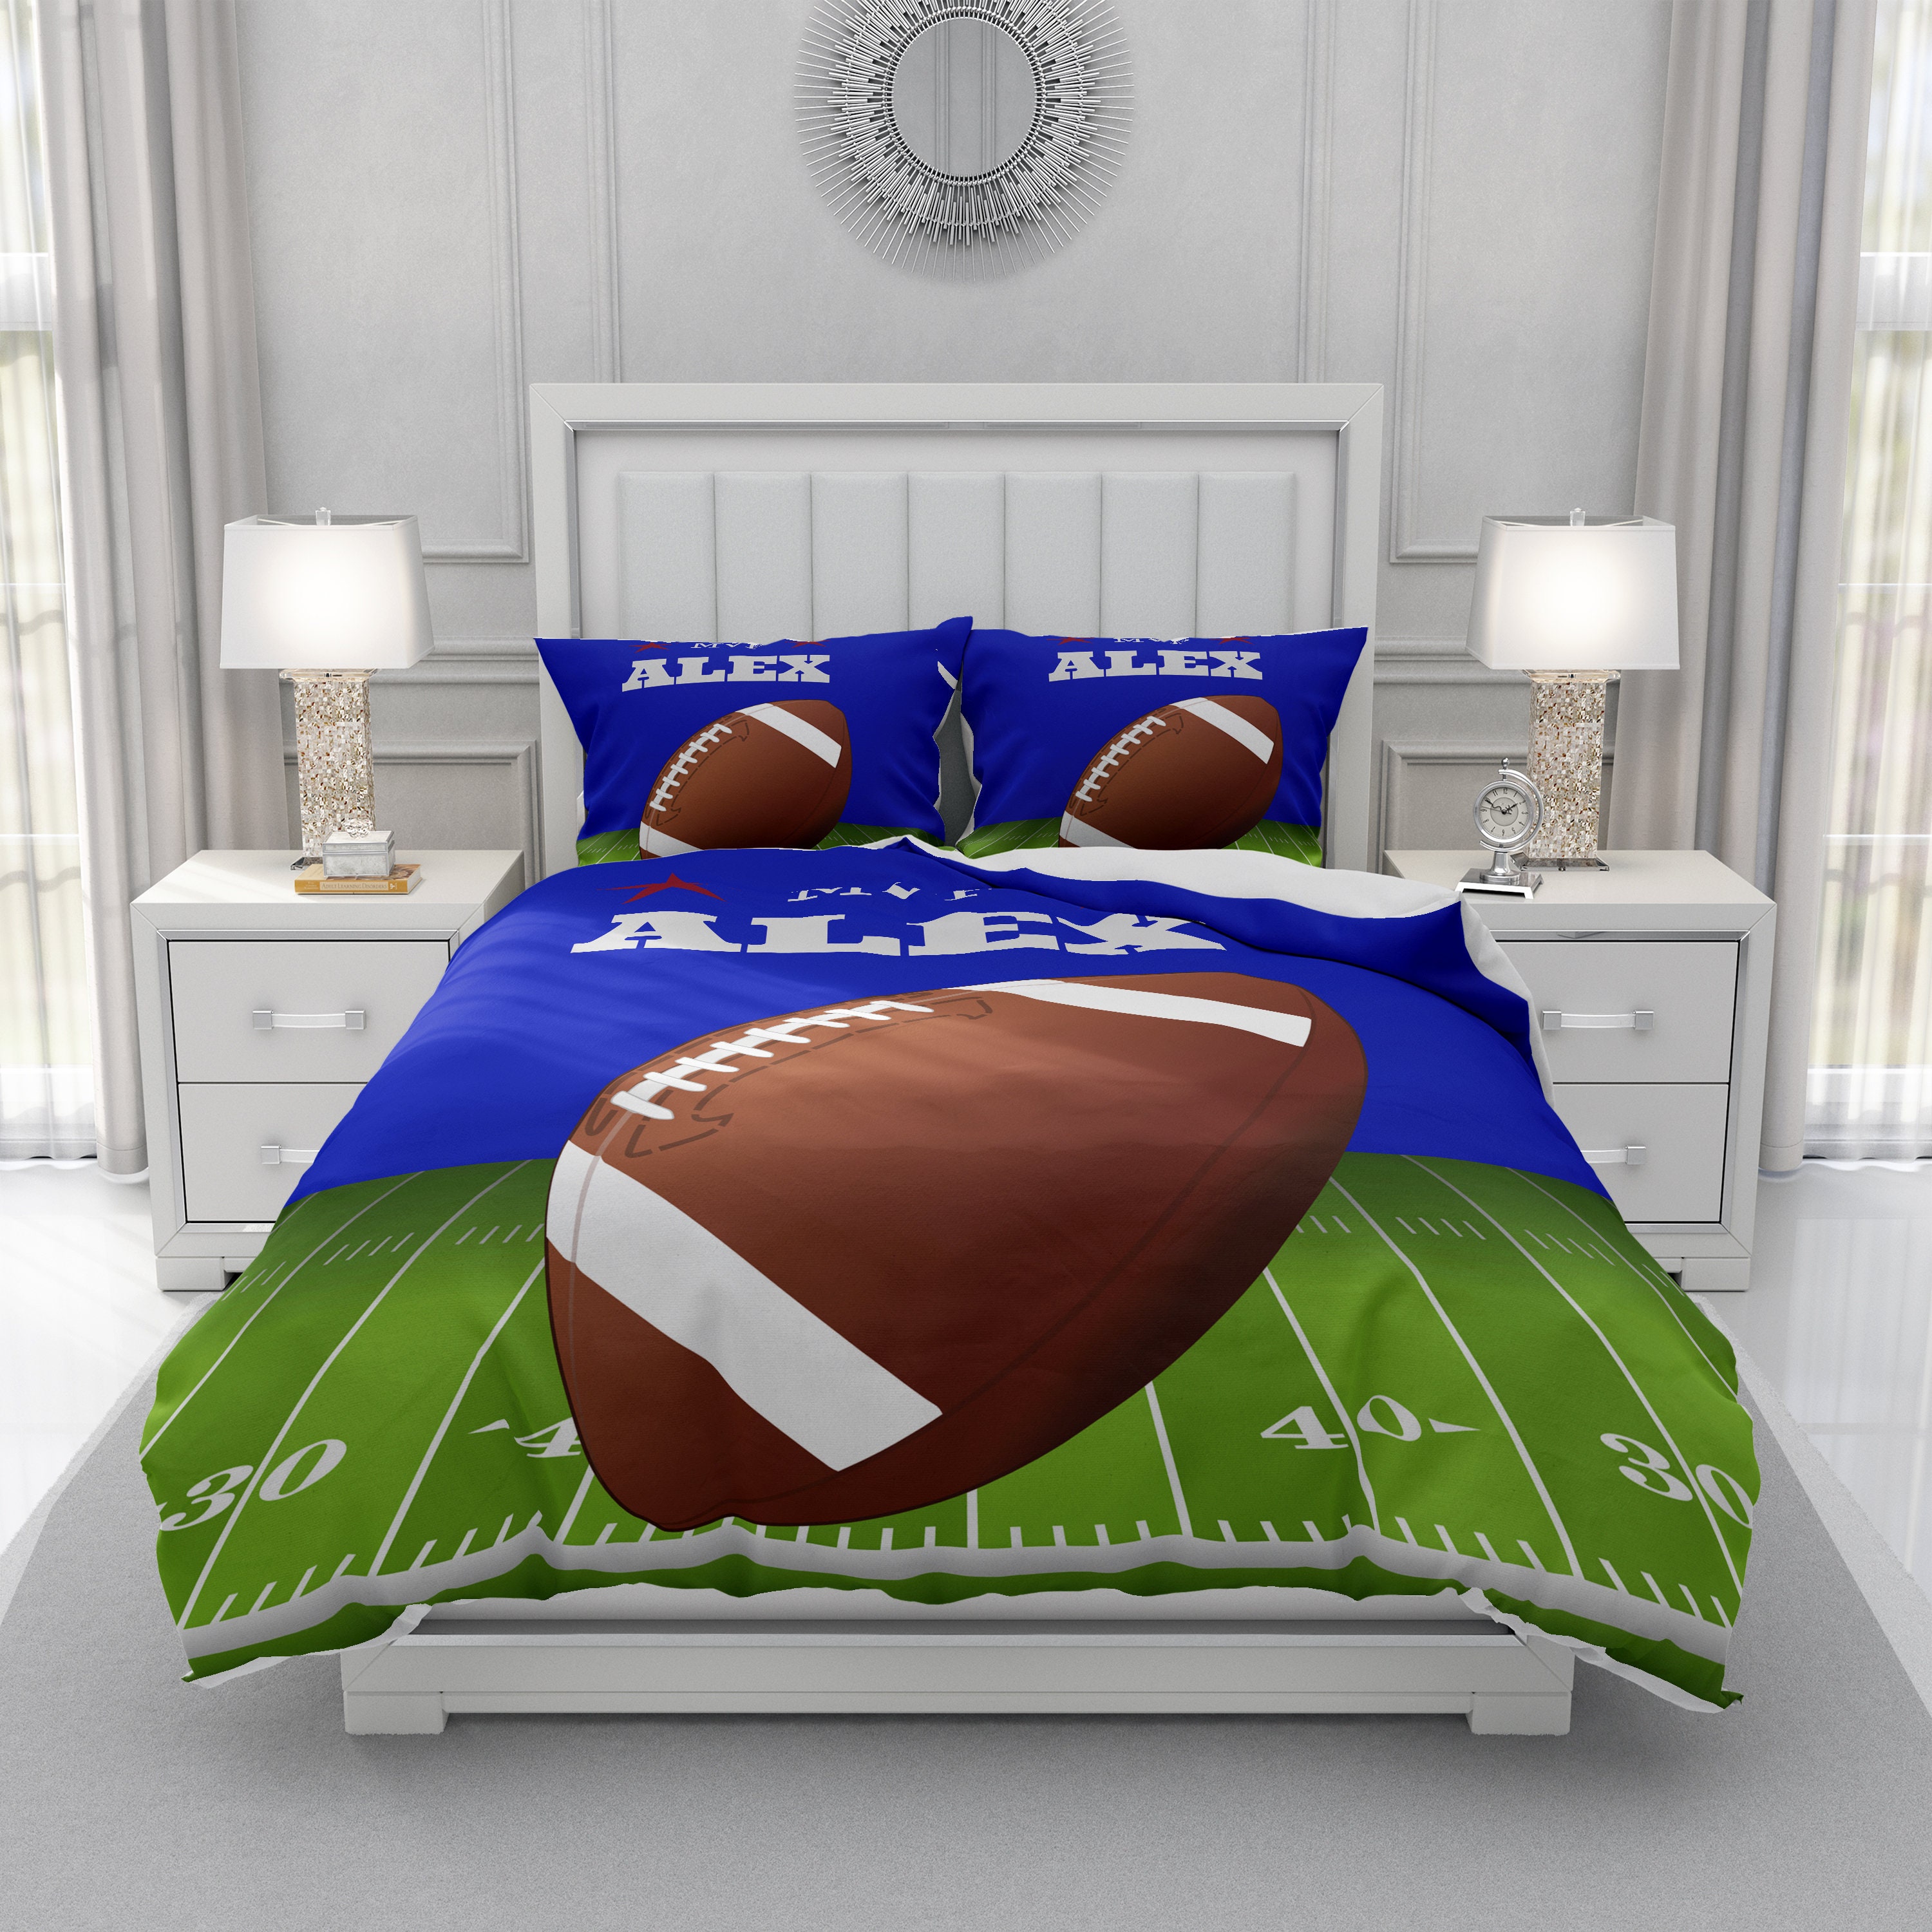 boys football bed